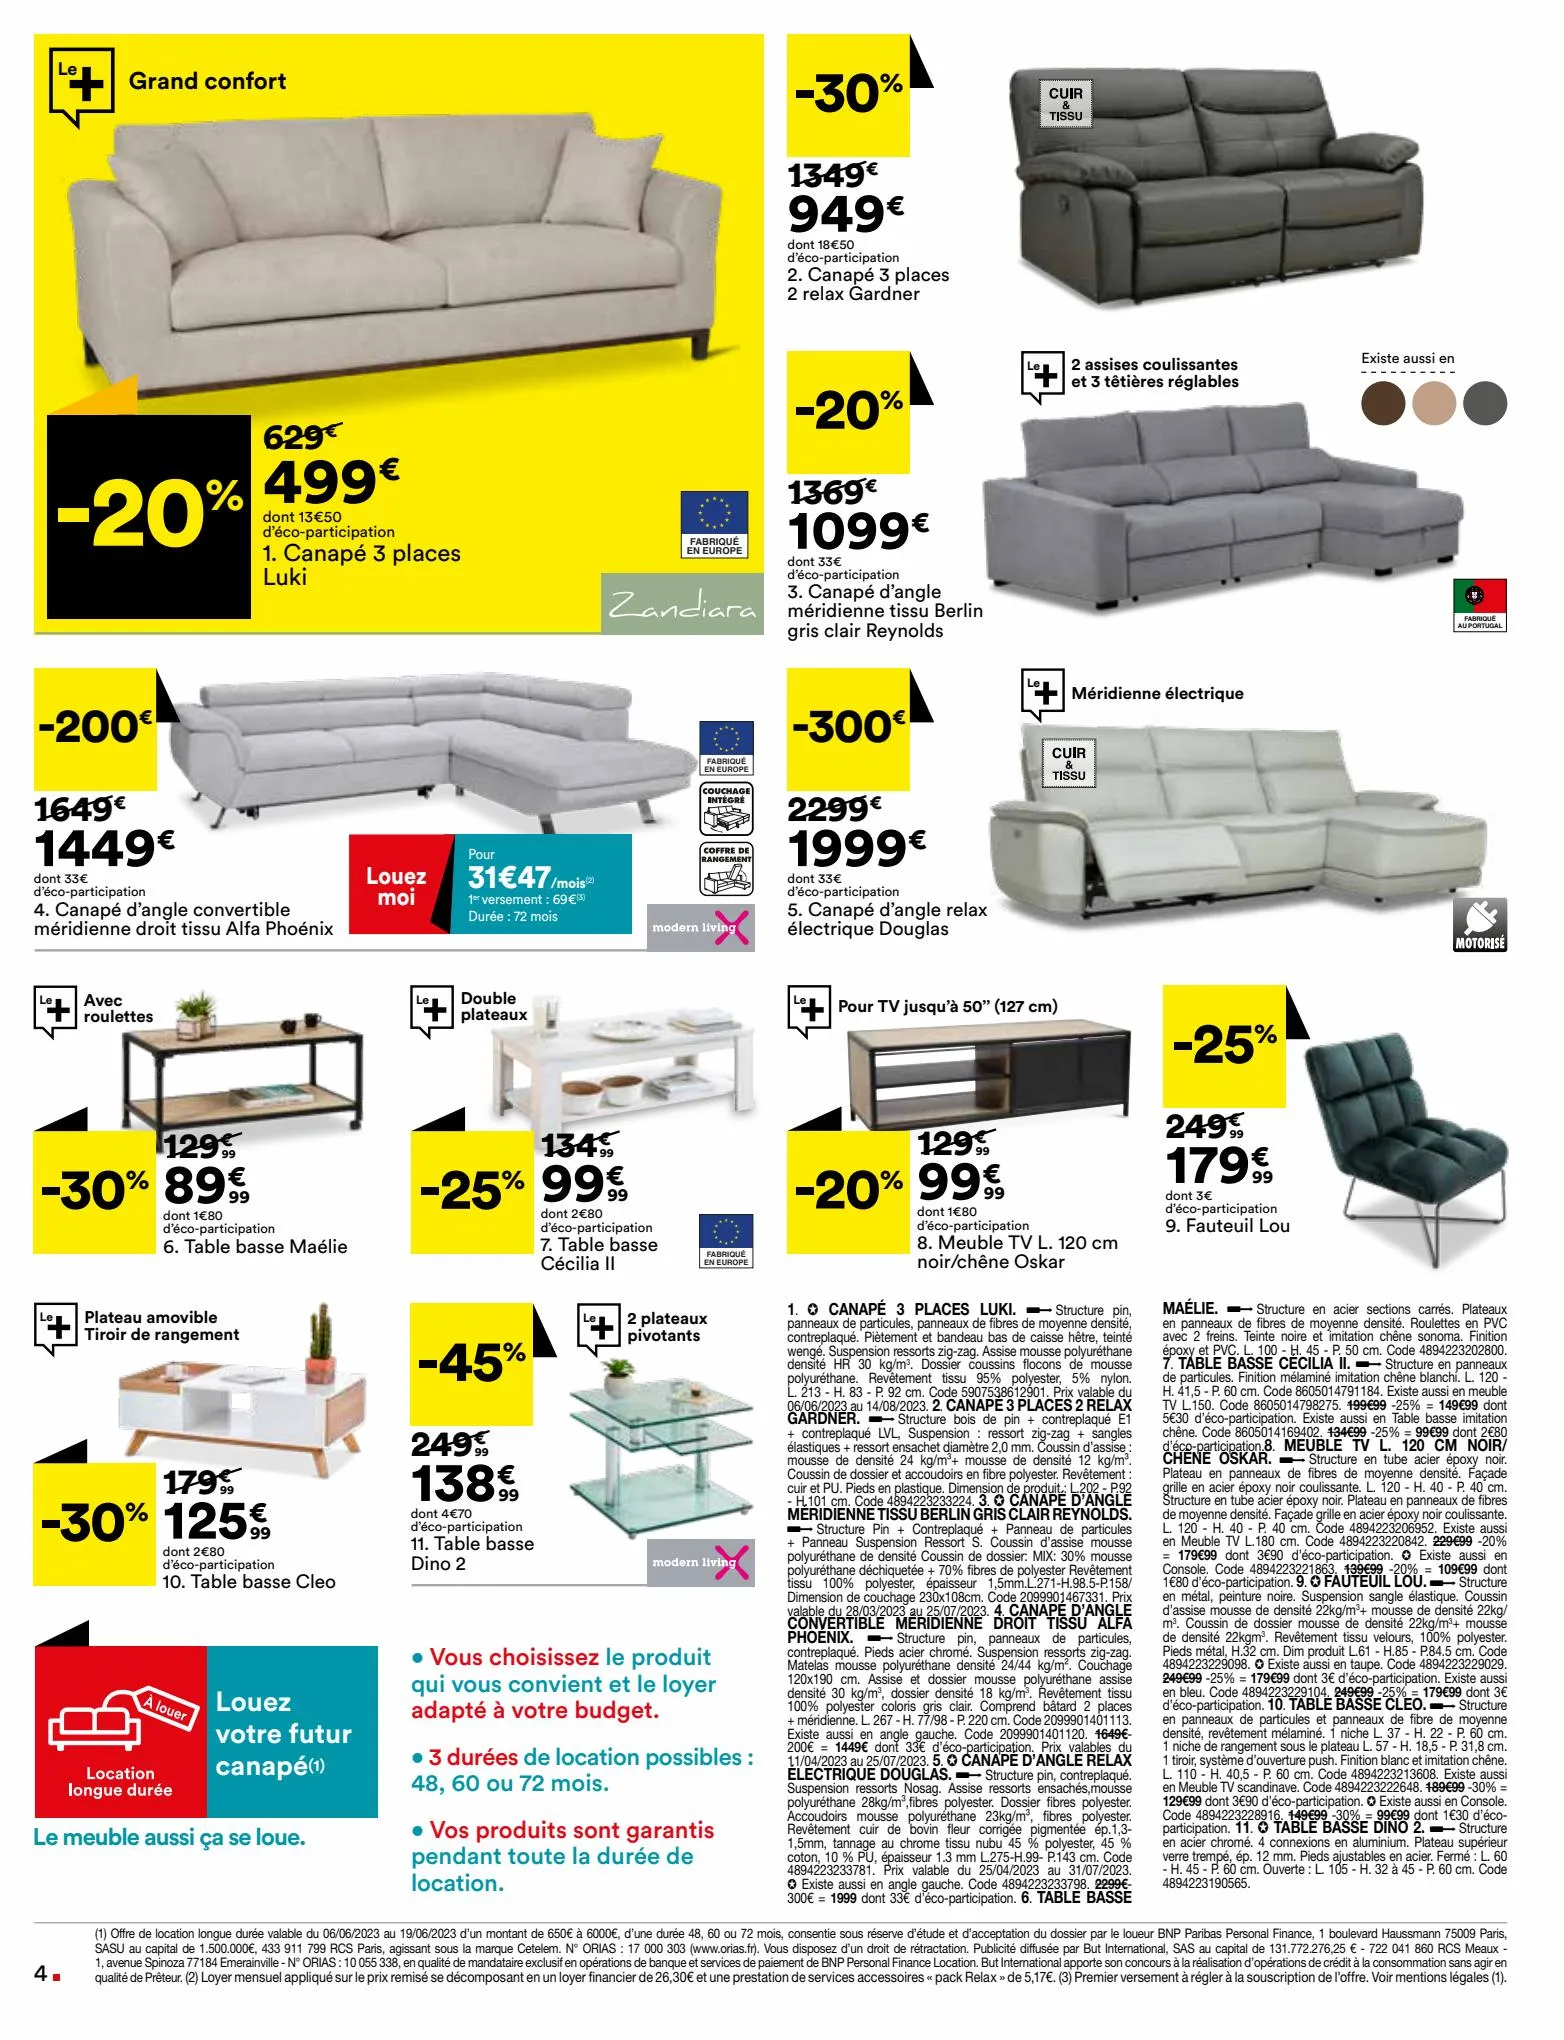 Catalogue Trash discount, page 00004